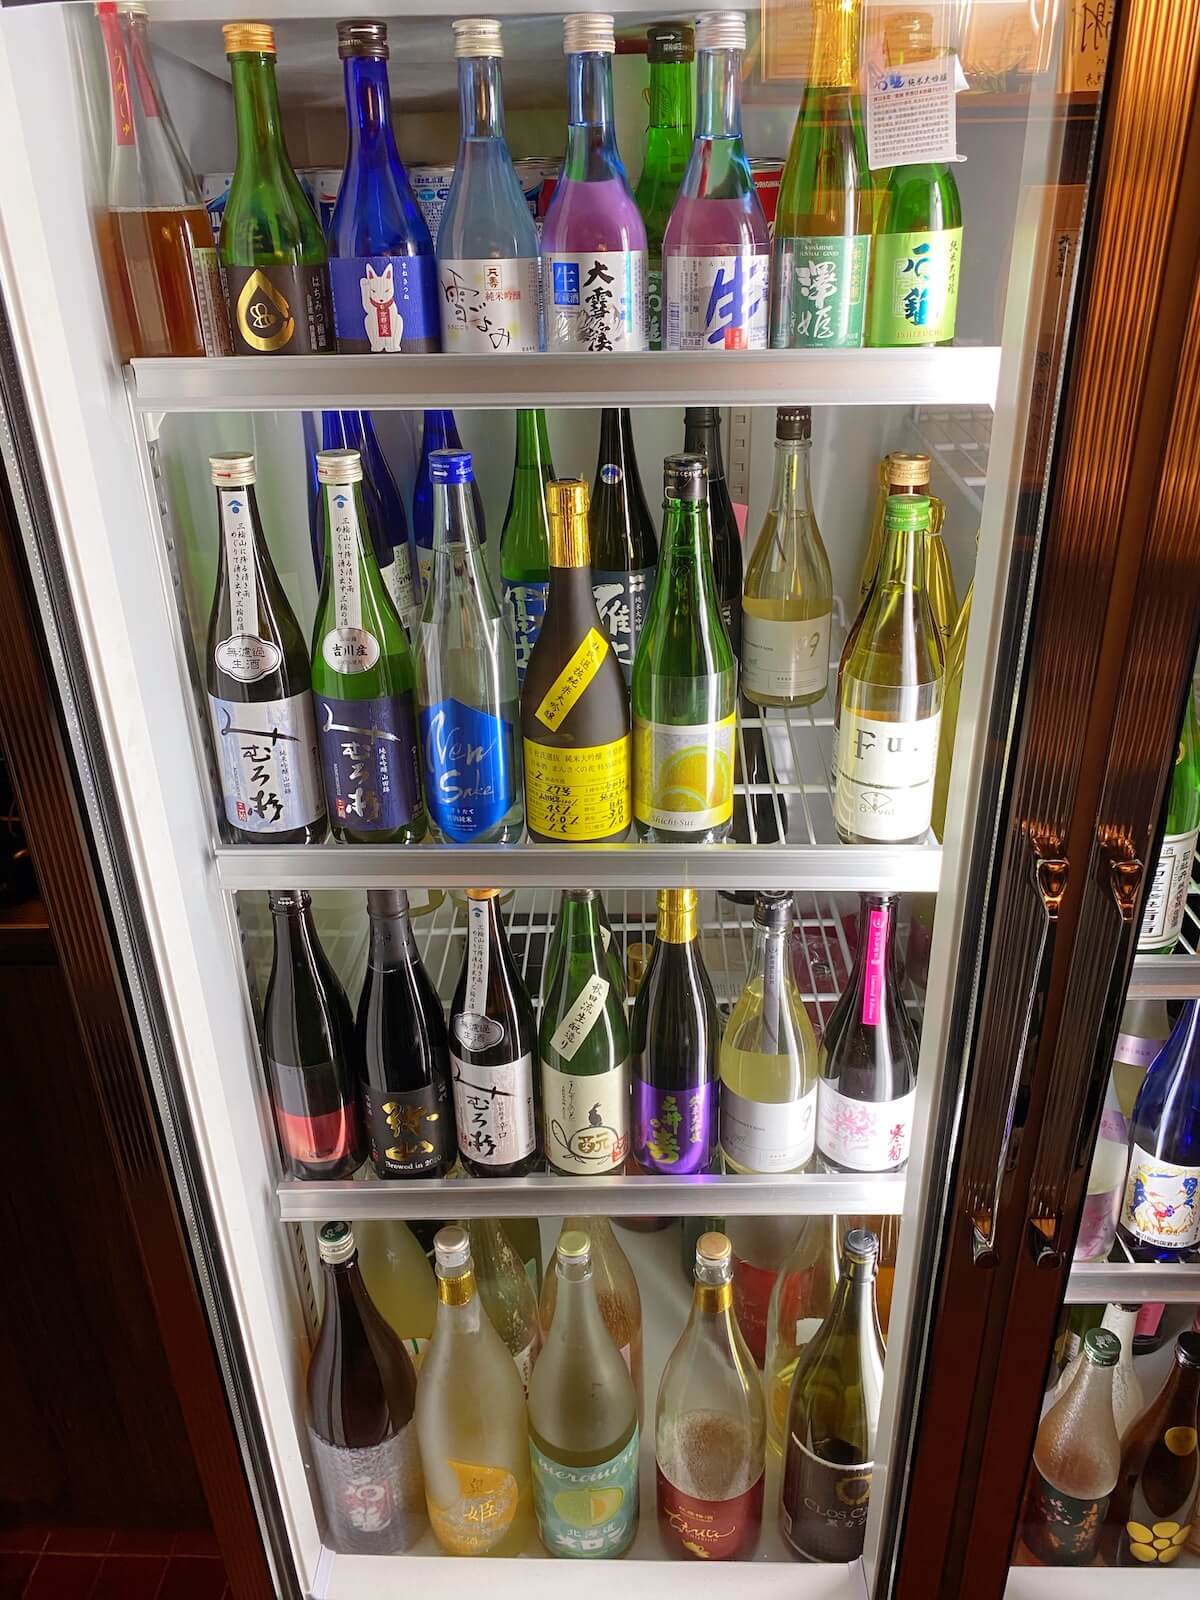 Sake refrigerator (left)